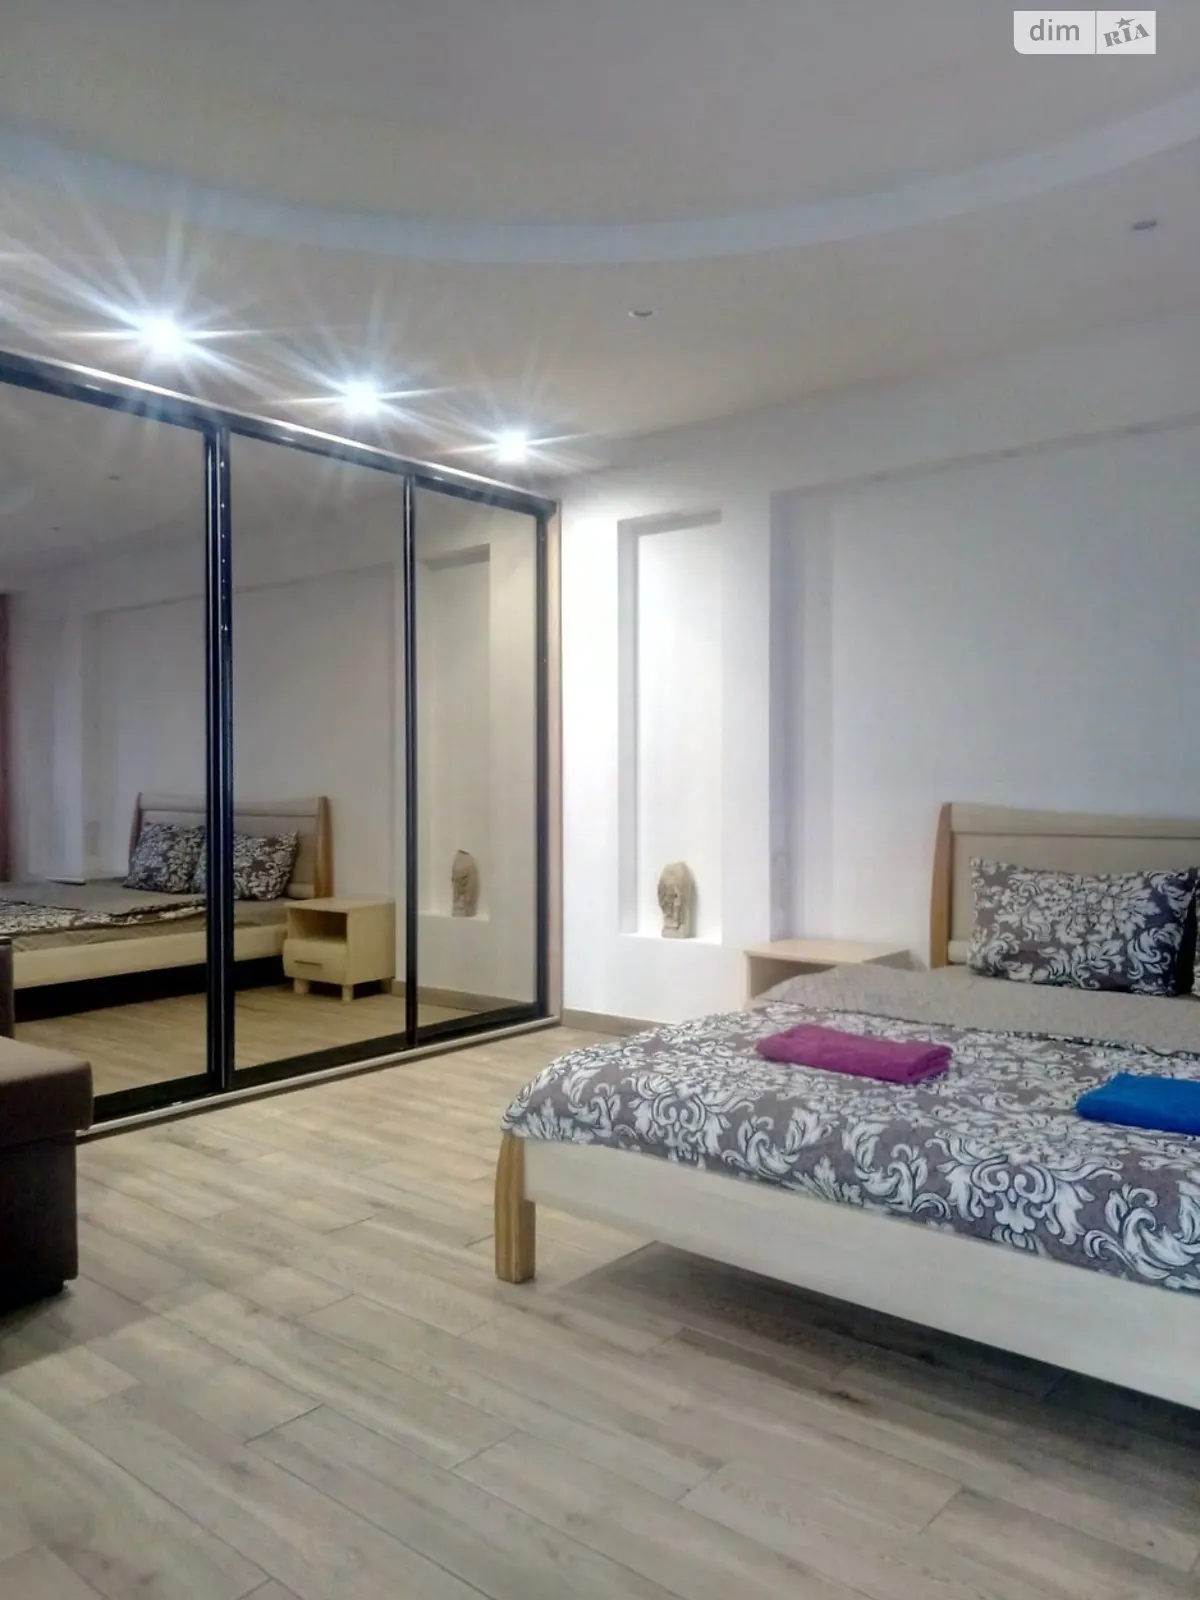 1-кімнатна квартира у Запоріжжі, цена: 1200 грн